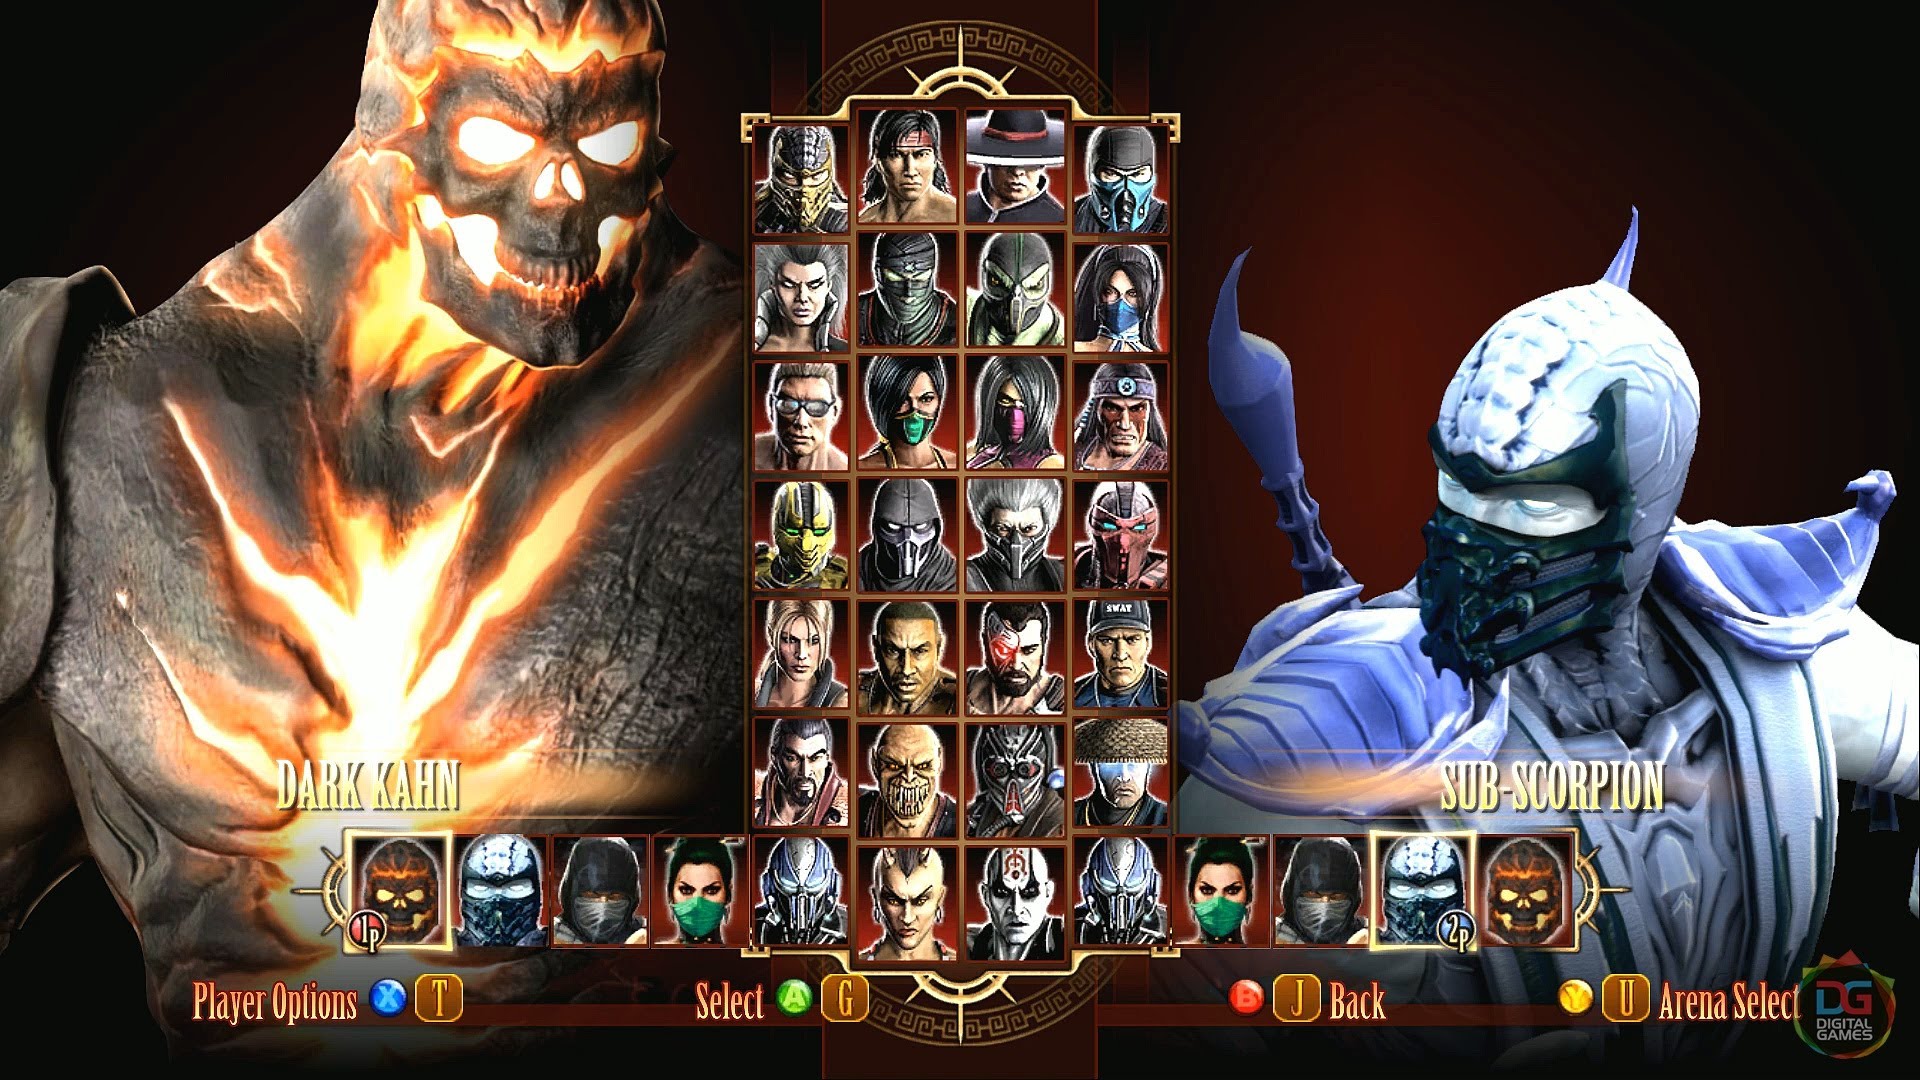 Most Beautiful Mortal Kombat 9 Fhdq Pictures - Mortal Kombat 9 Character Select , HD Wallpaper & Backgrounds